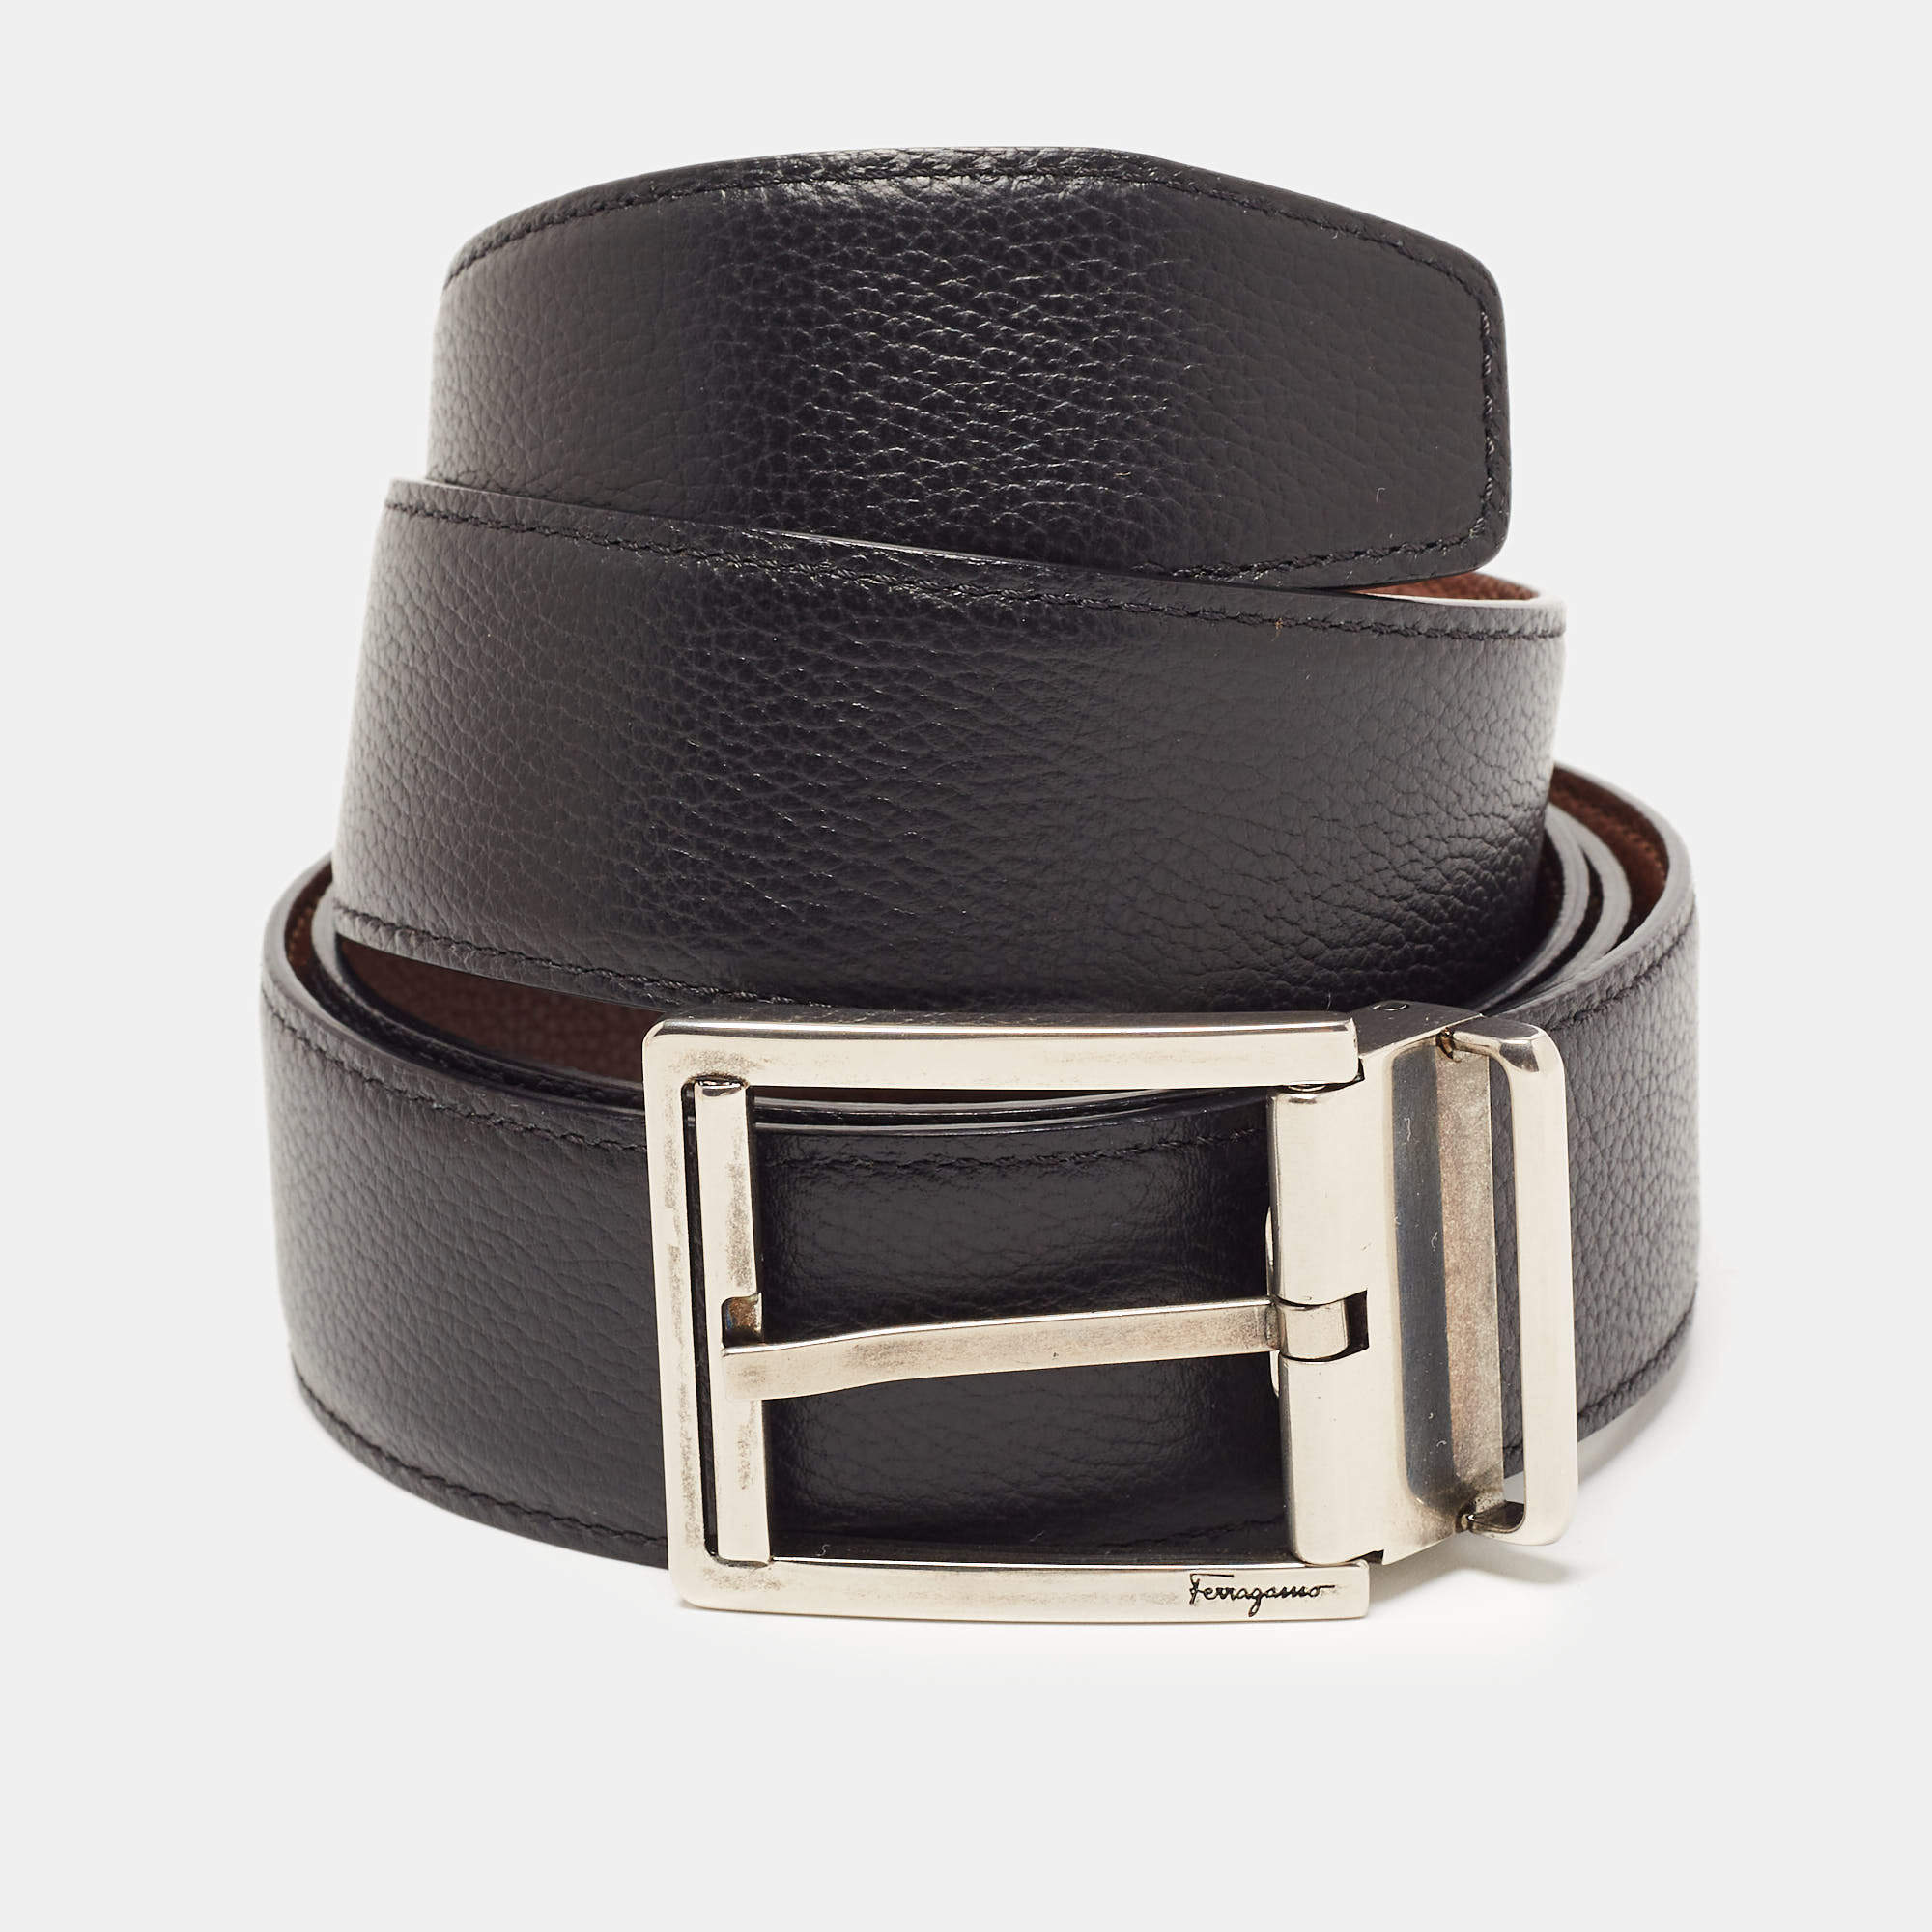 Salvatore Ferragamo Men's Regular Leather Belt